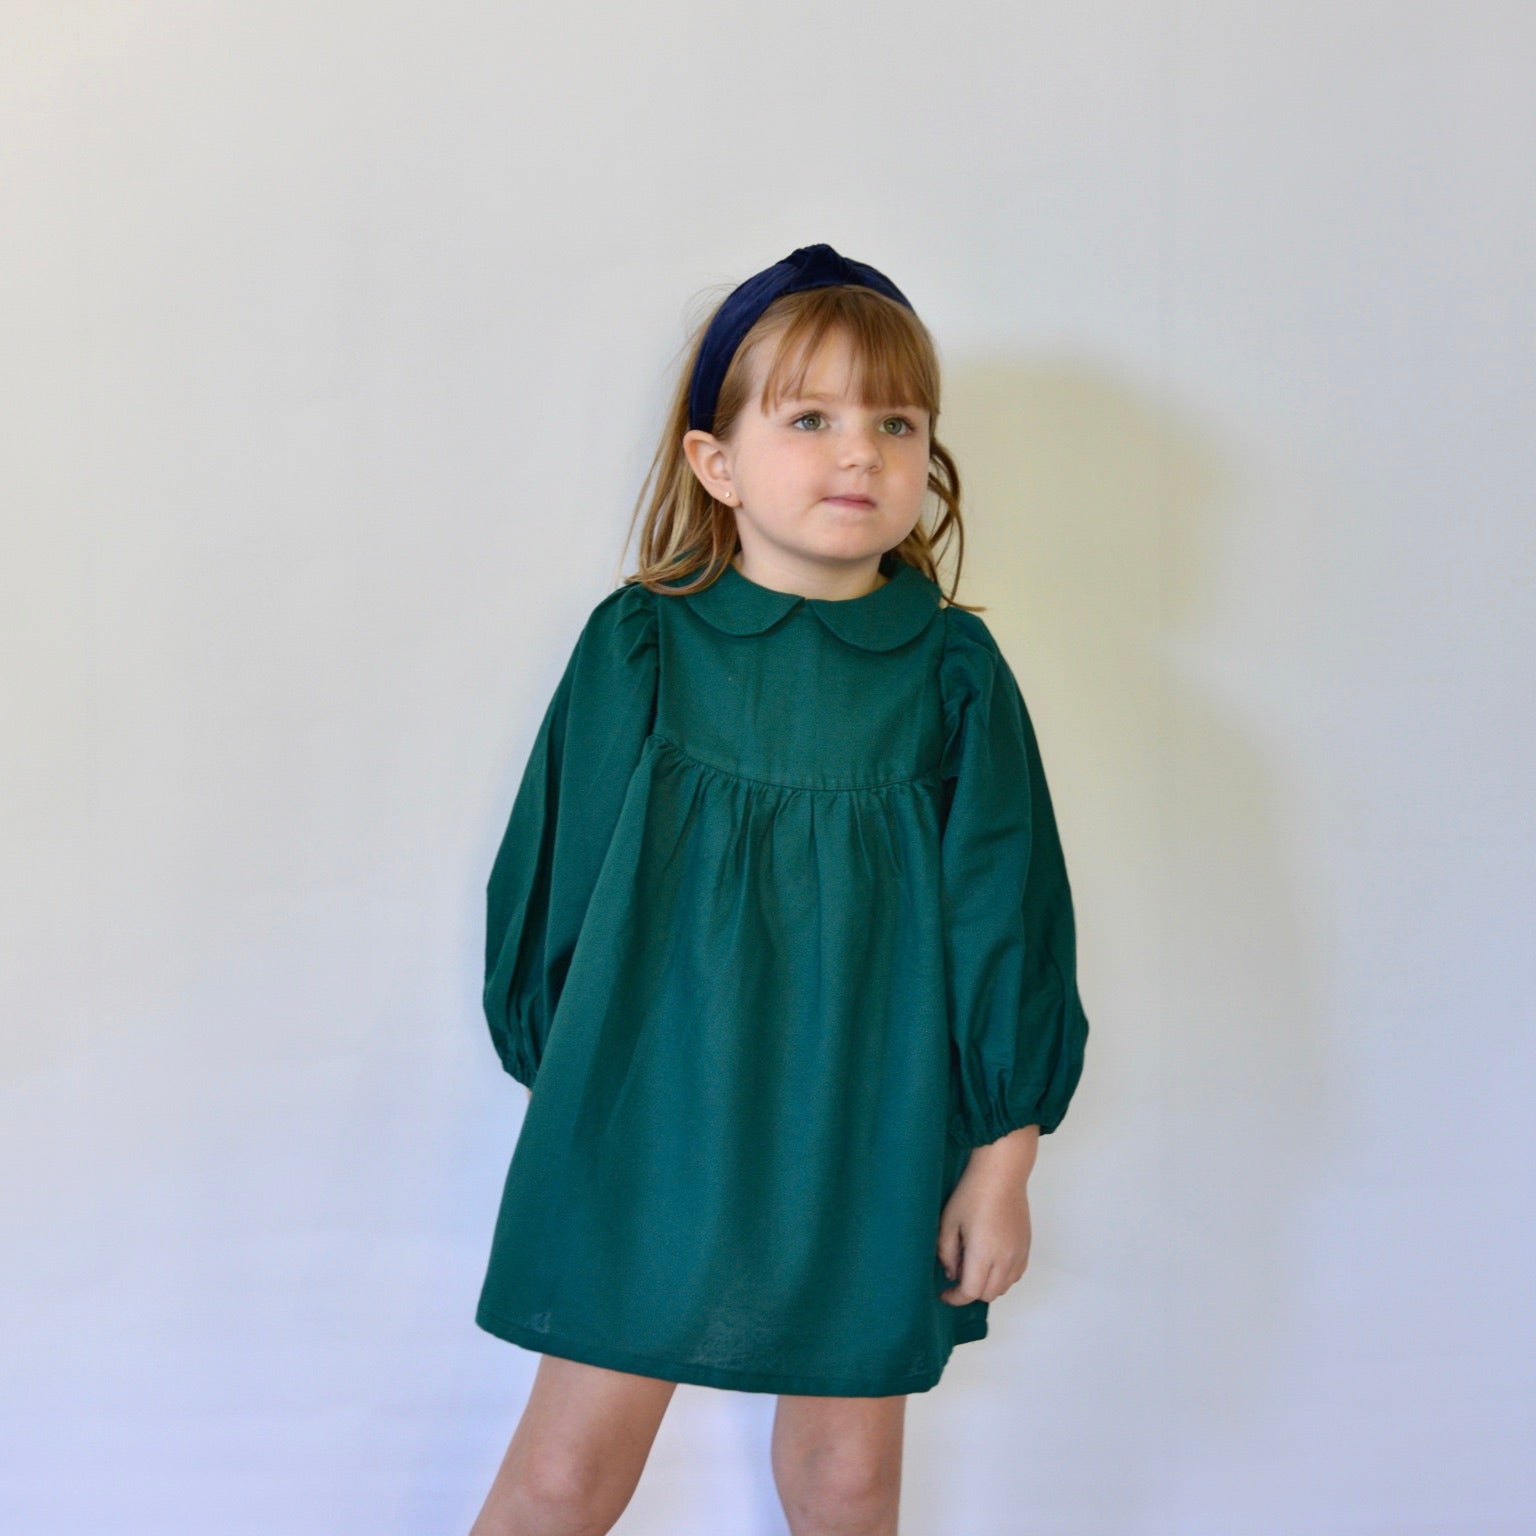 Clementine Dress - Emerald